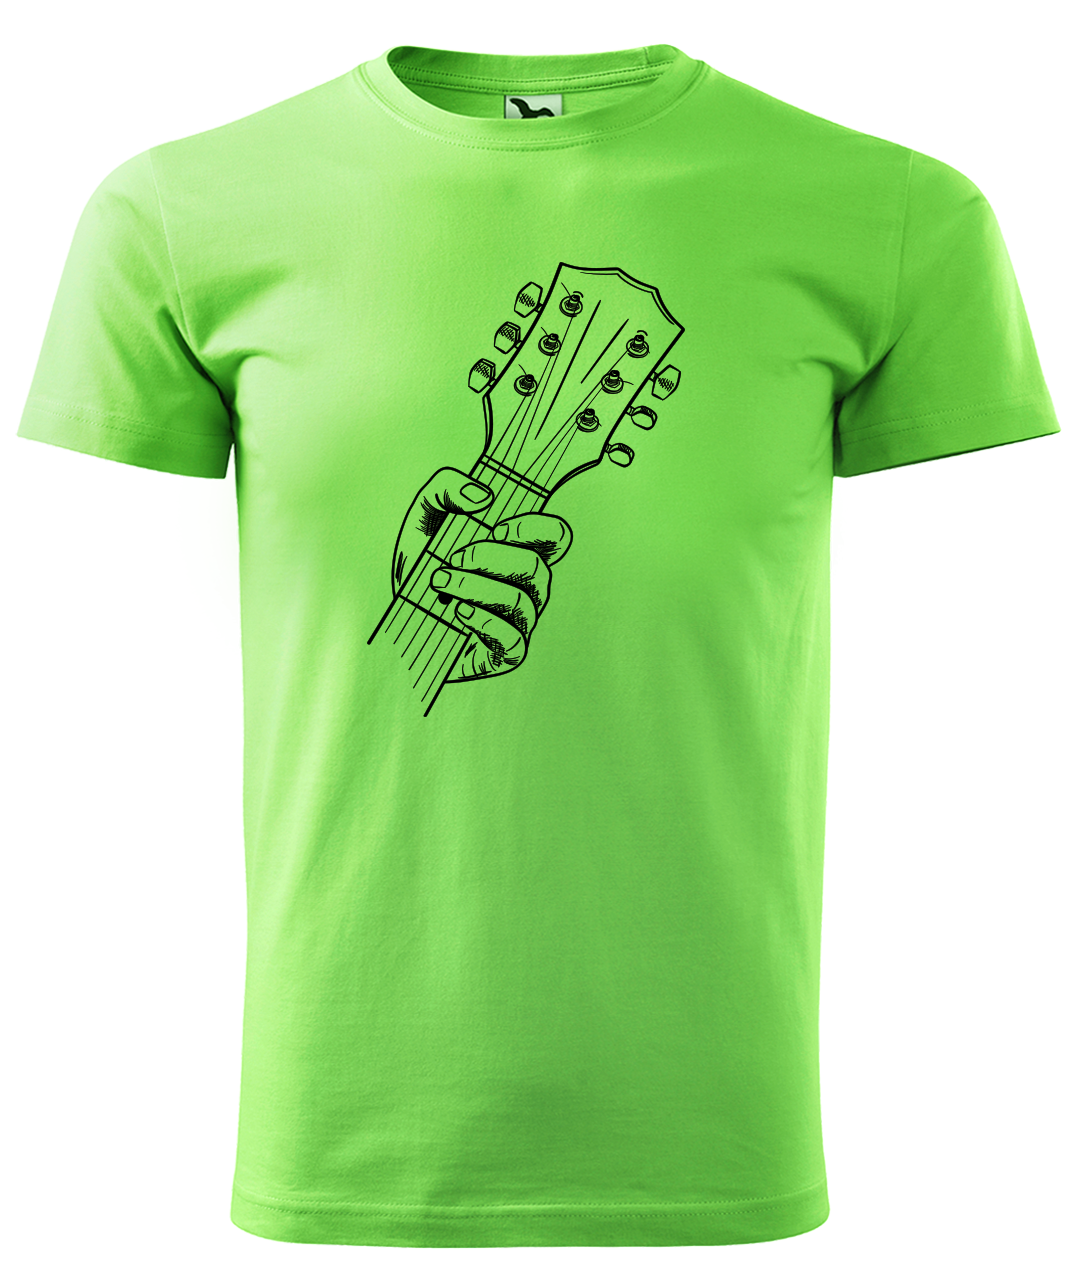 Dětské tričko s kytarou - Hlava kytary Velikost: 4 roky / 110 cm, Barva: Apple Green (92)